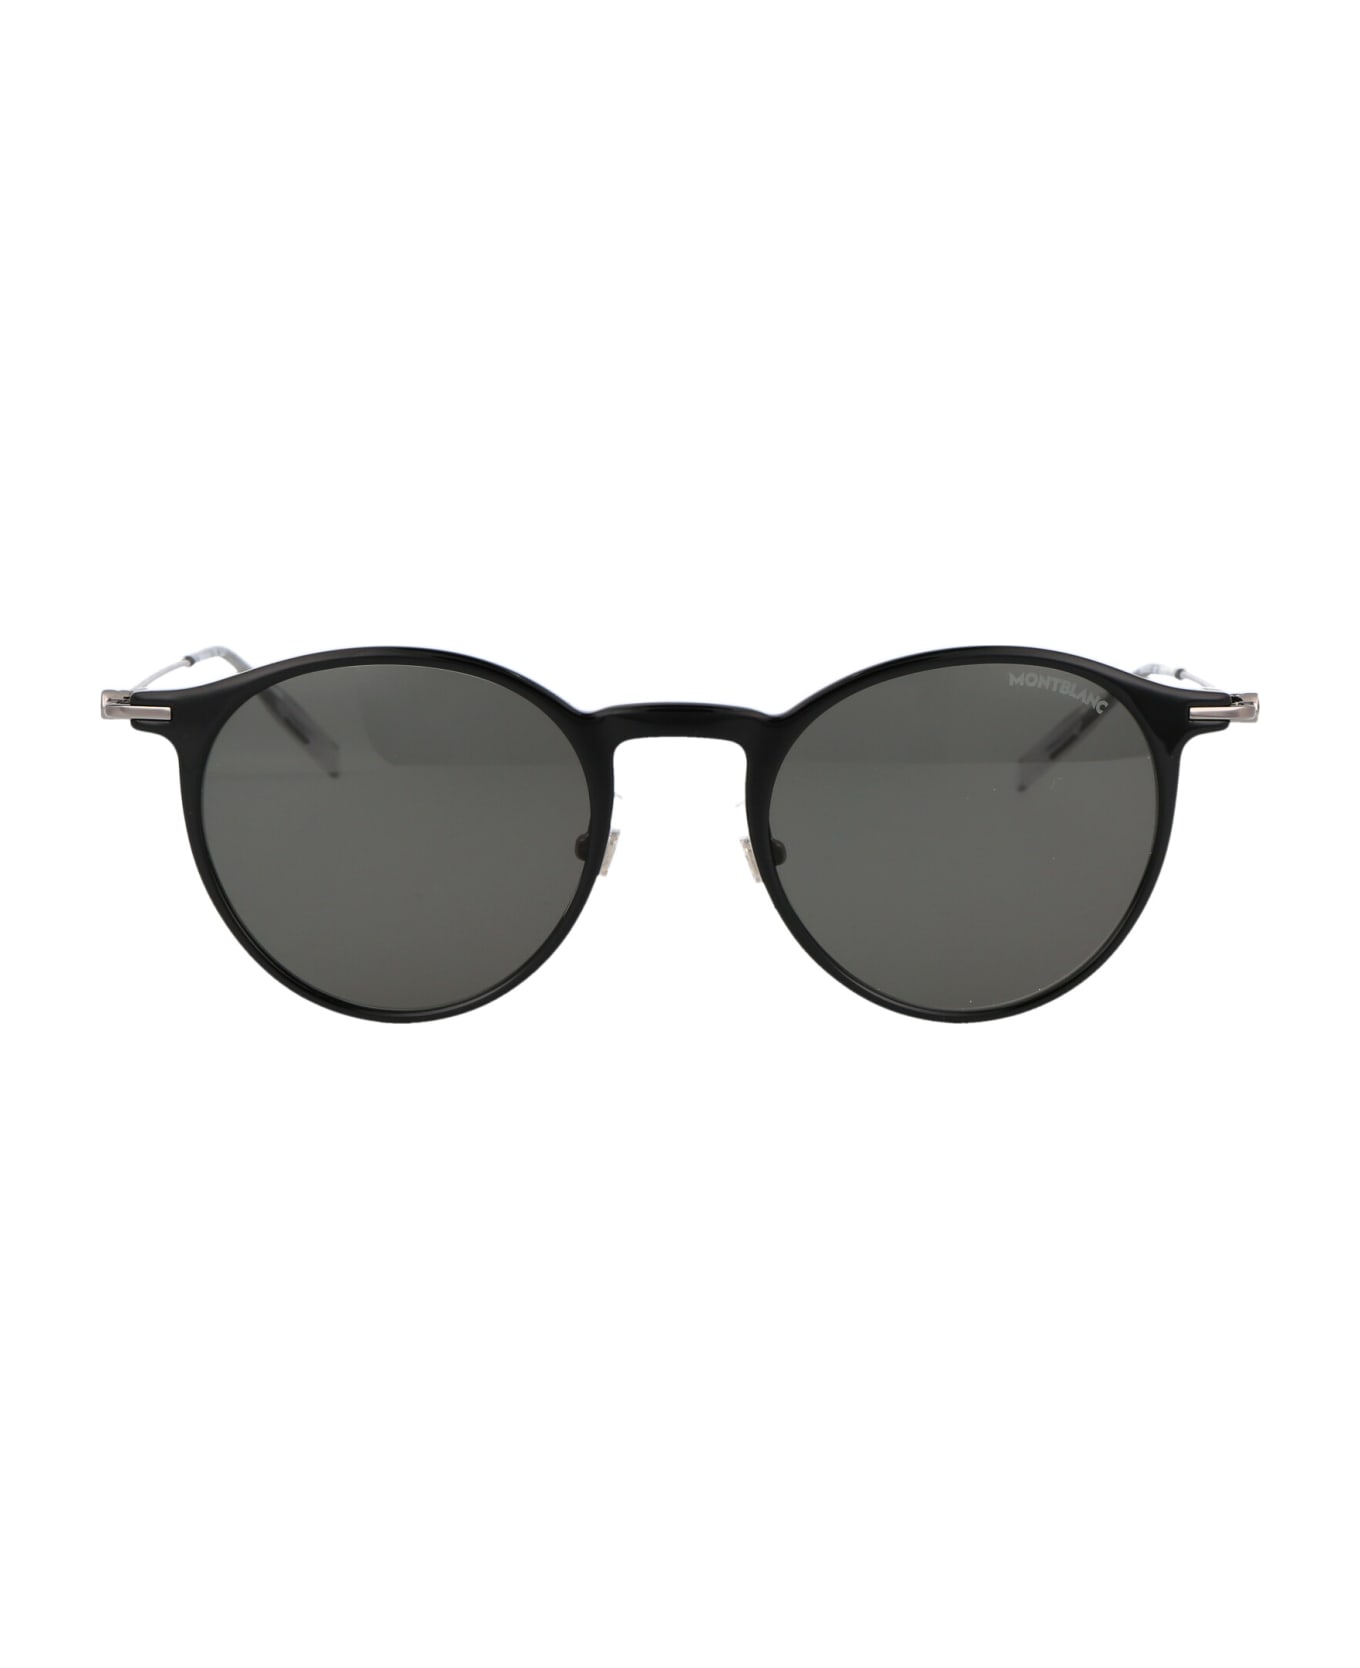 Montblanc Mb0097s Sunglasses - 005 BLACK RUTHENIUM GREY サングラス